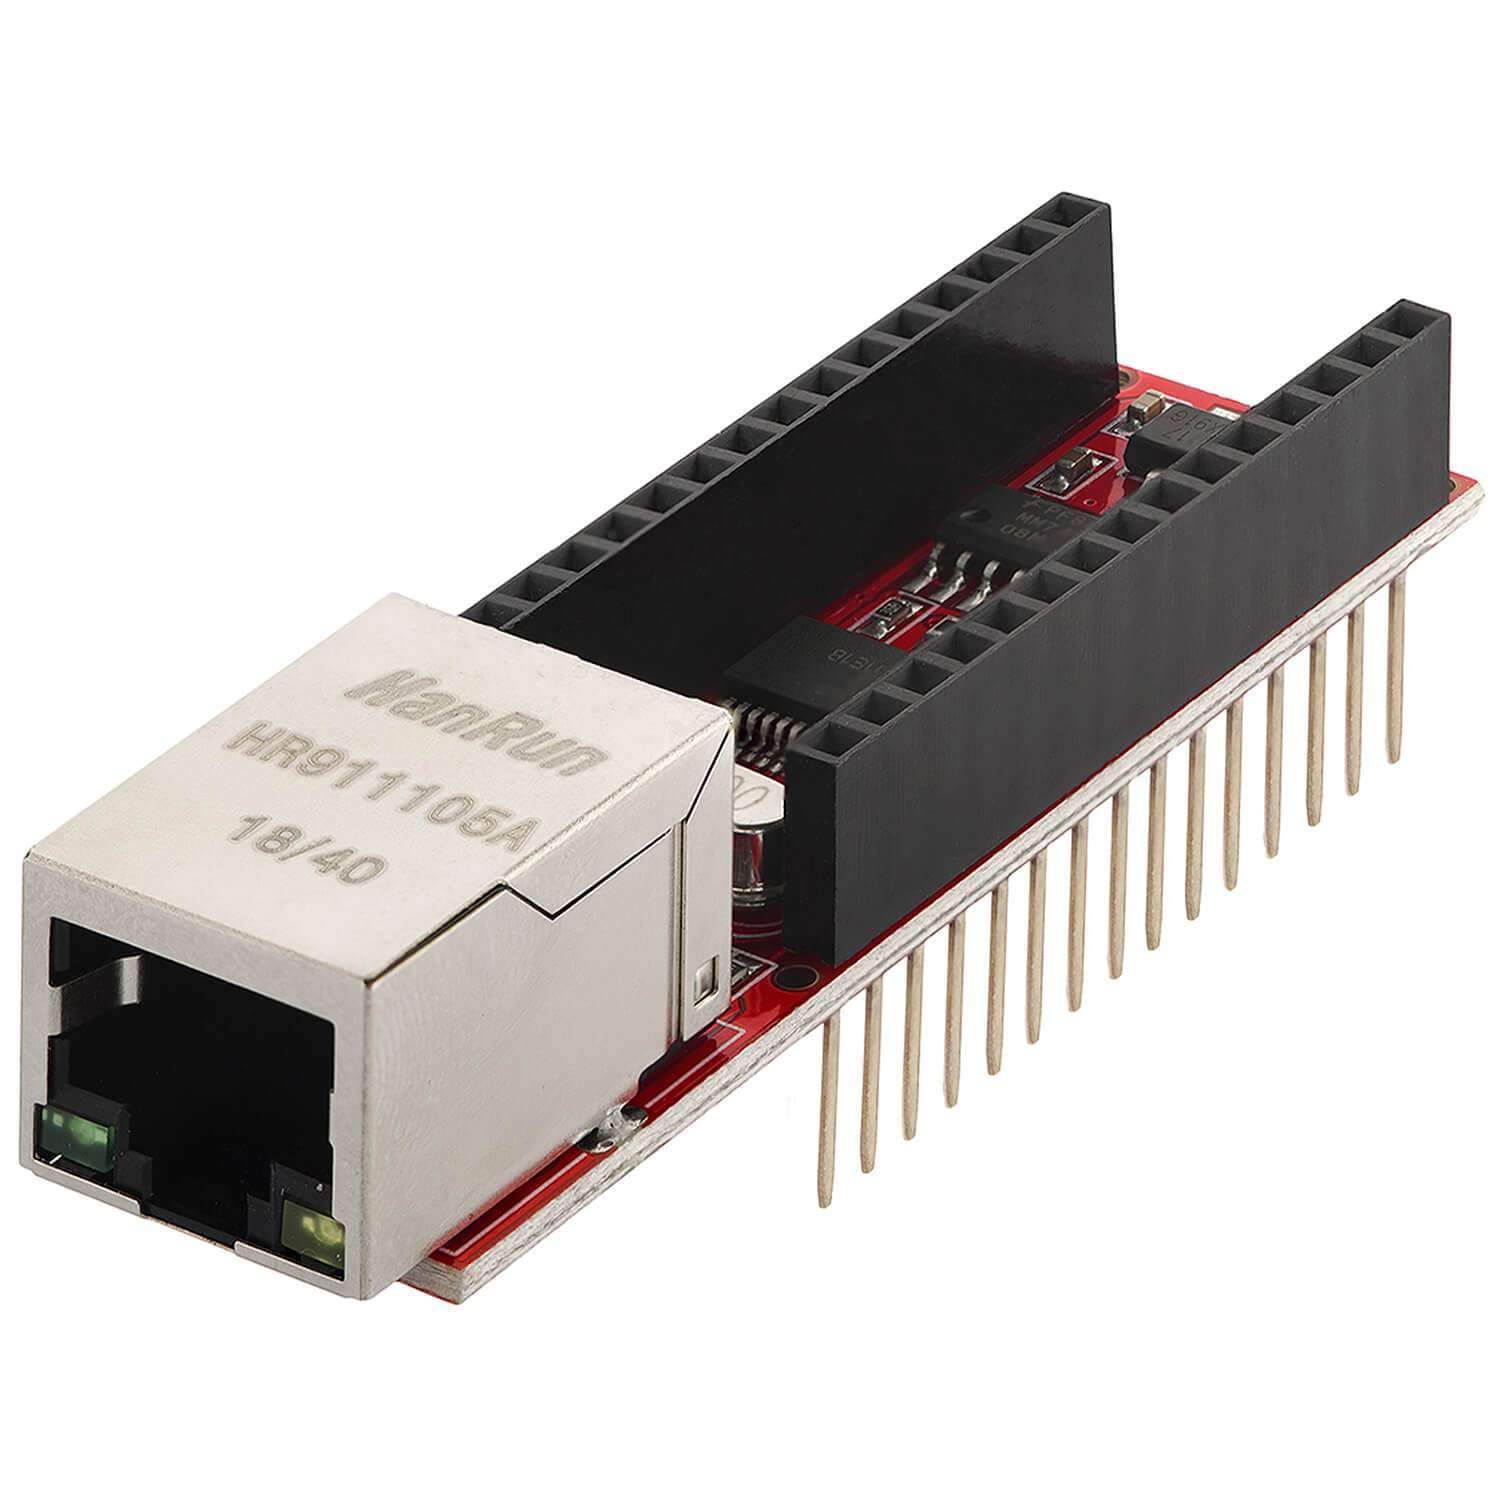 ENC28J60 Ethernet Shield kompatibel mit Arduino Nano V3.0 - AZ-Delivery